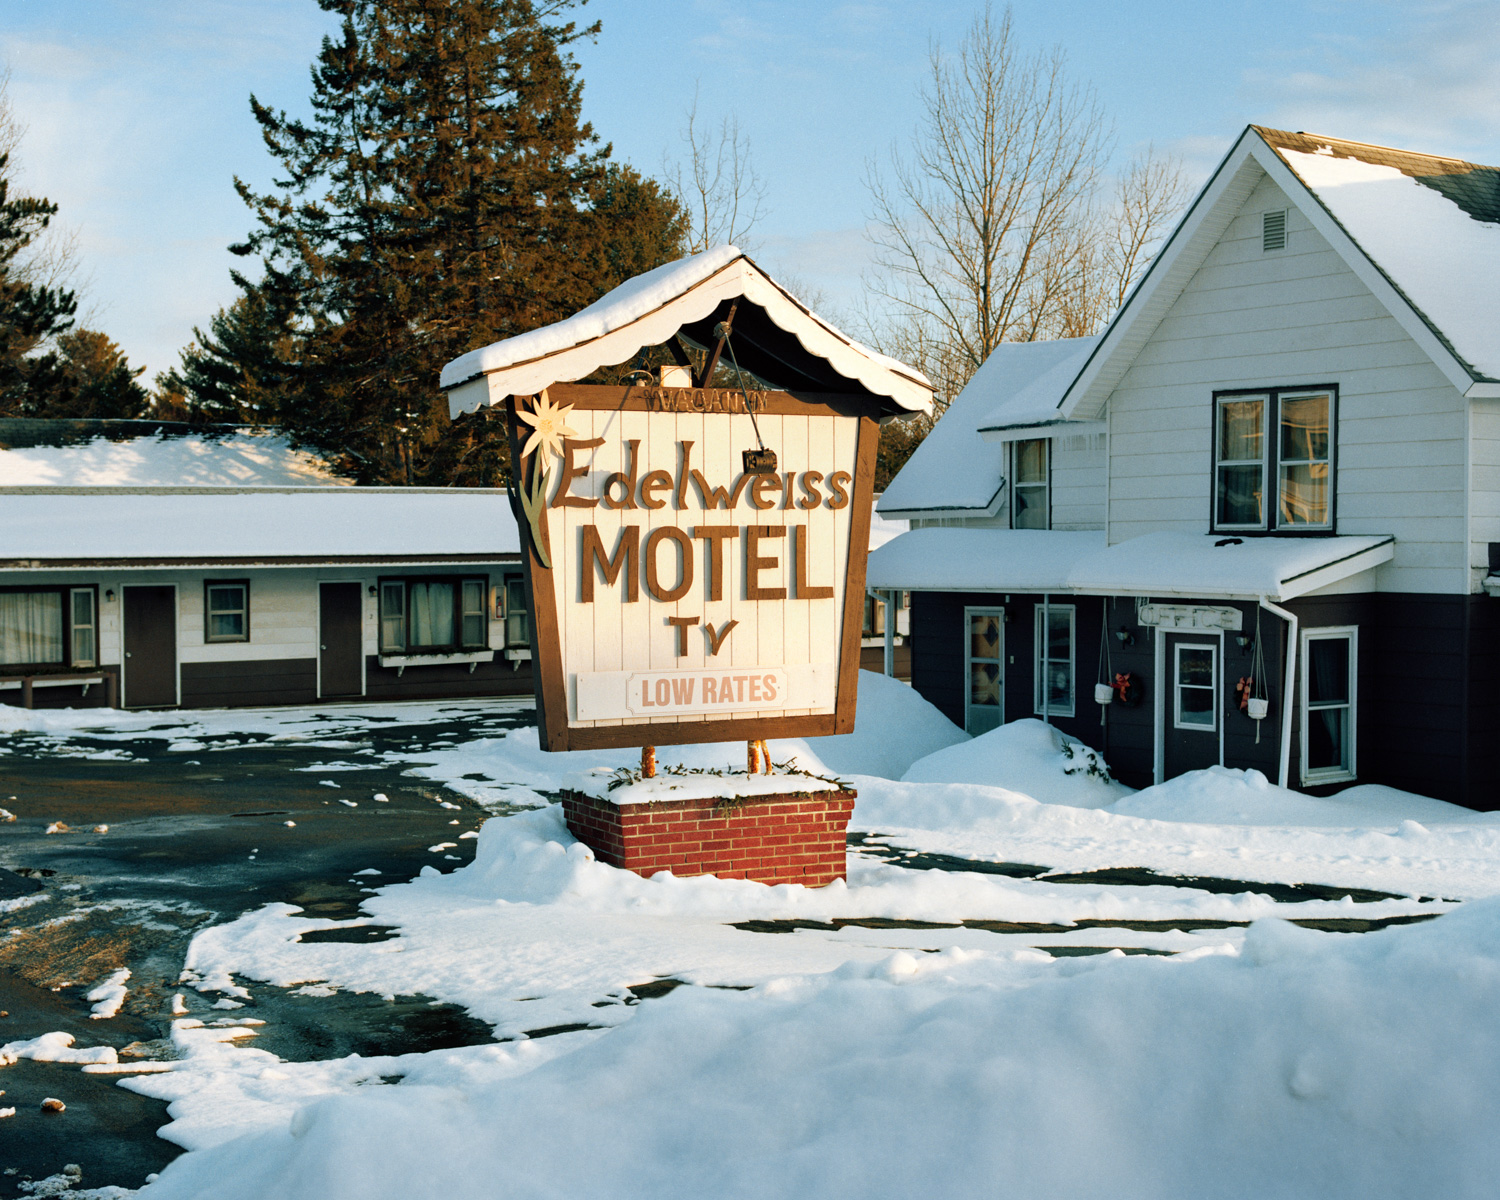 Edelweiss Motel, Lake Placid